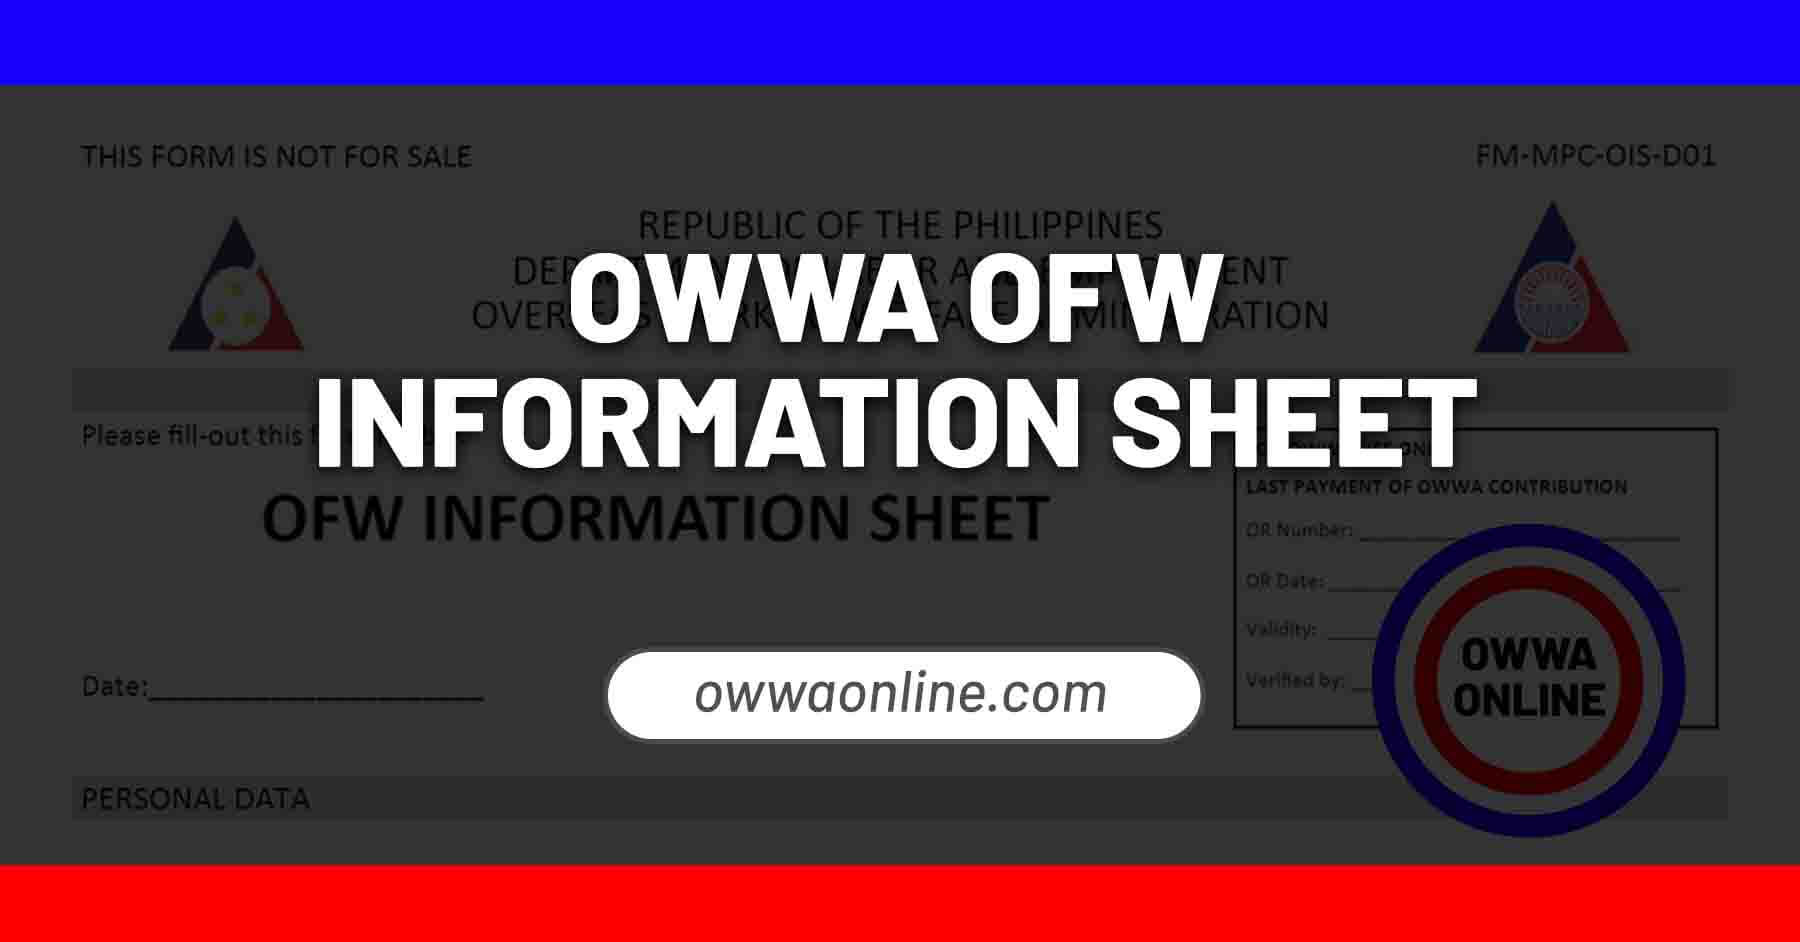 download ofw information sheet owwa membership form online